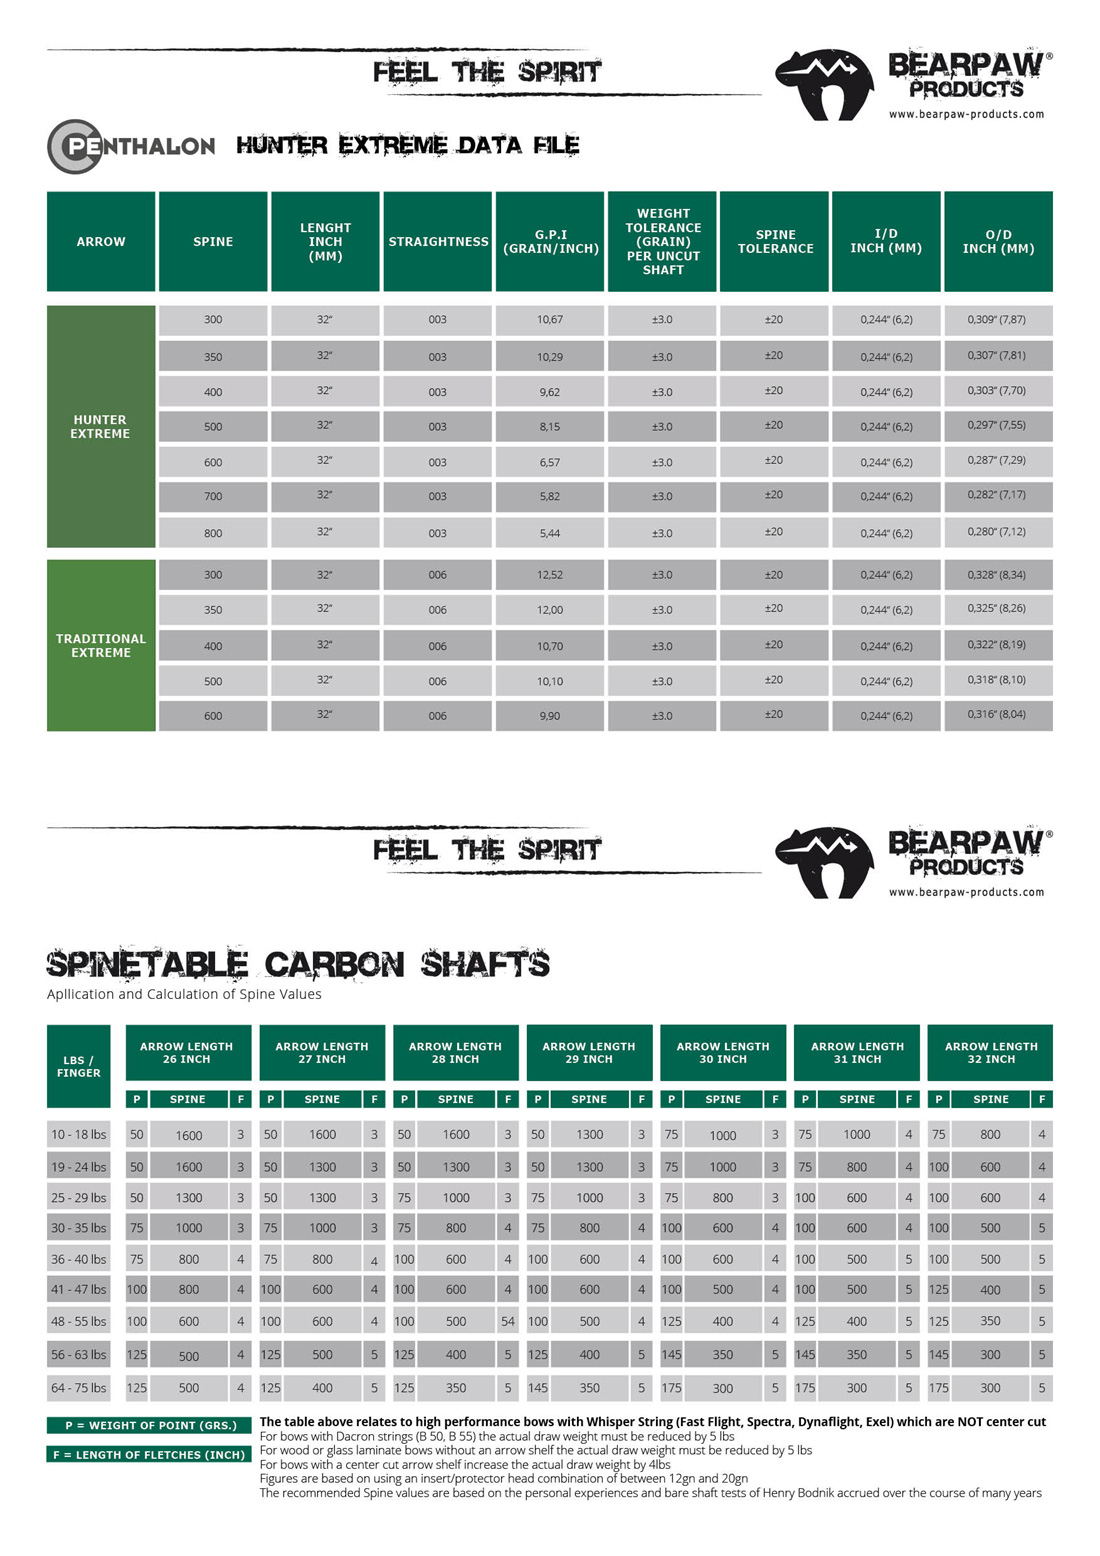 Bearpaw Arrow Spine Chart